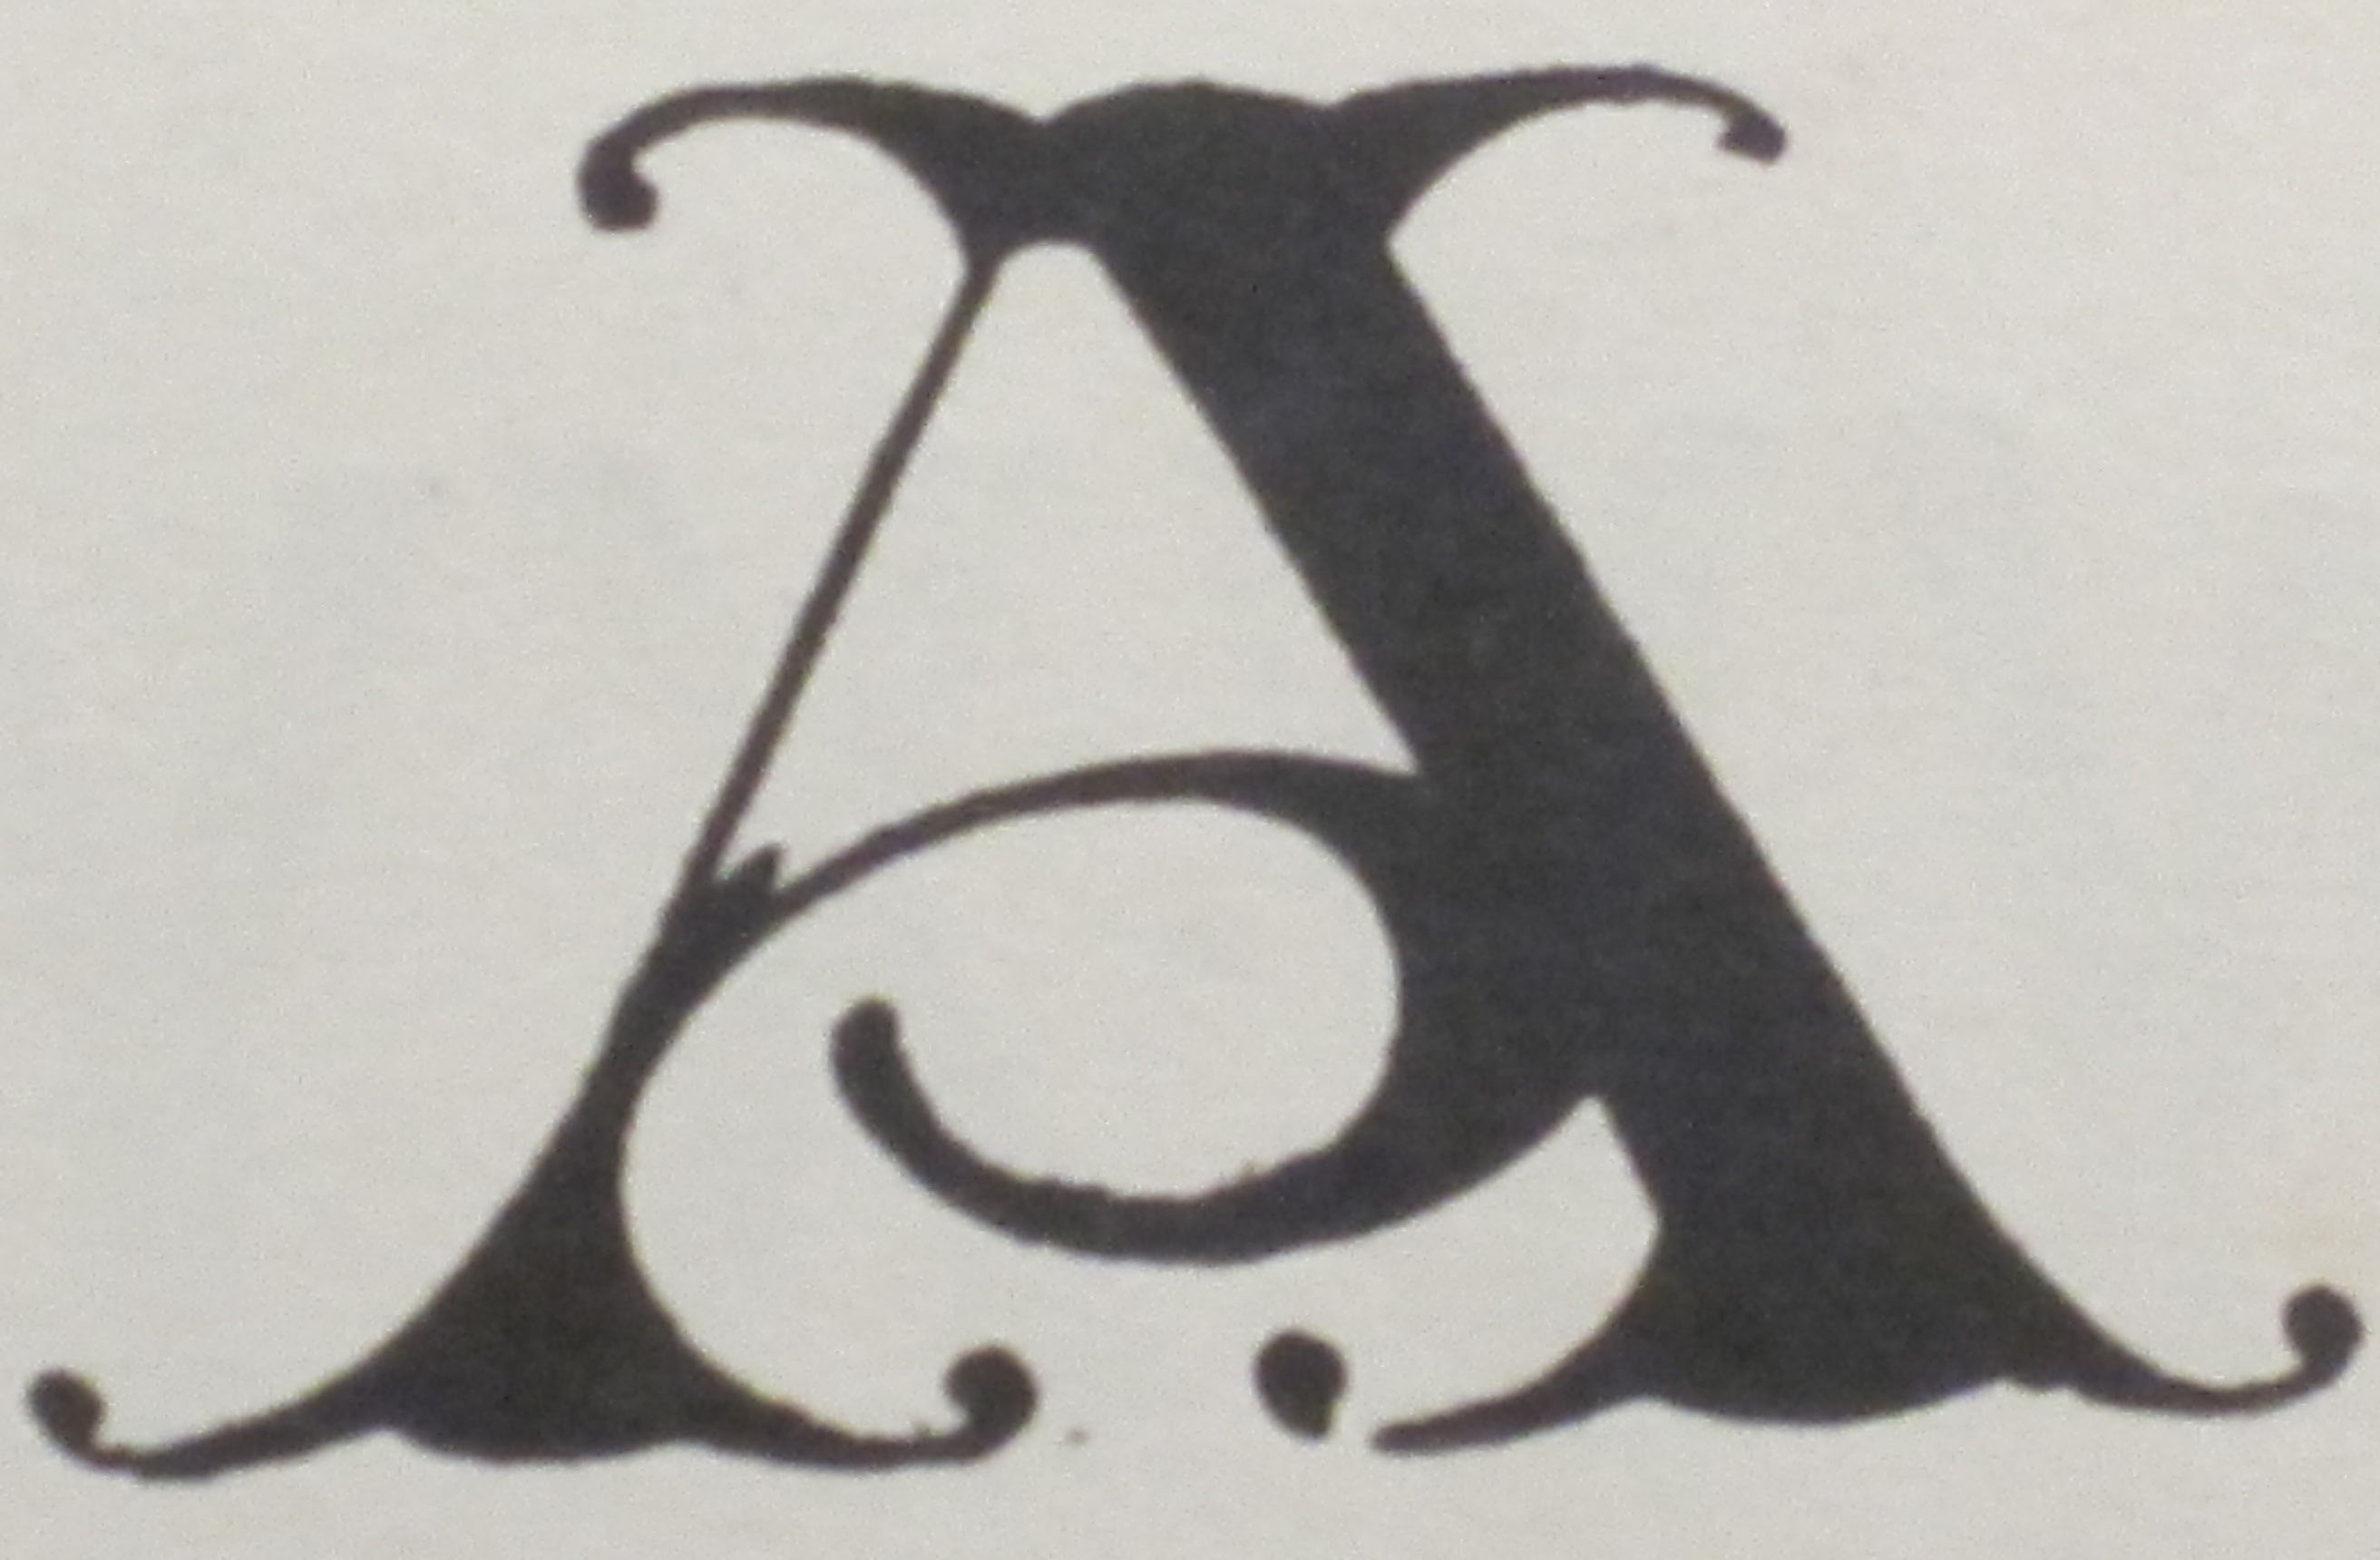  A_alphabet.jpg